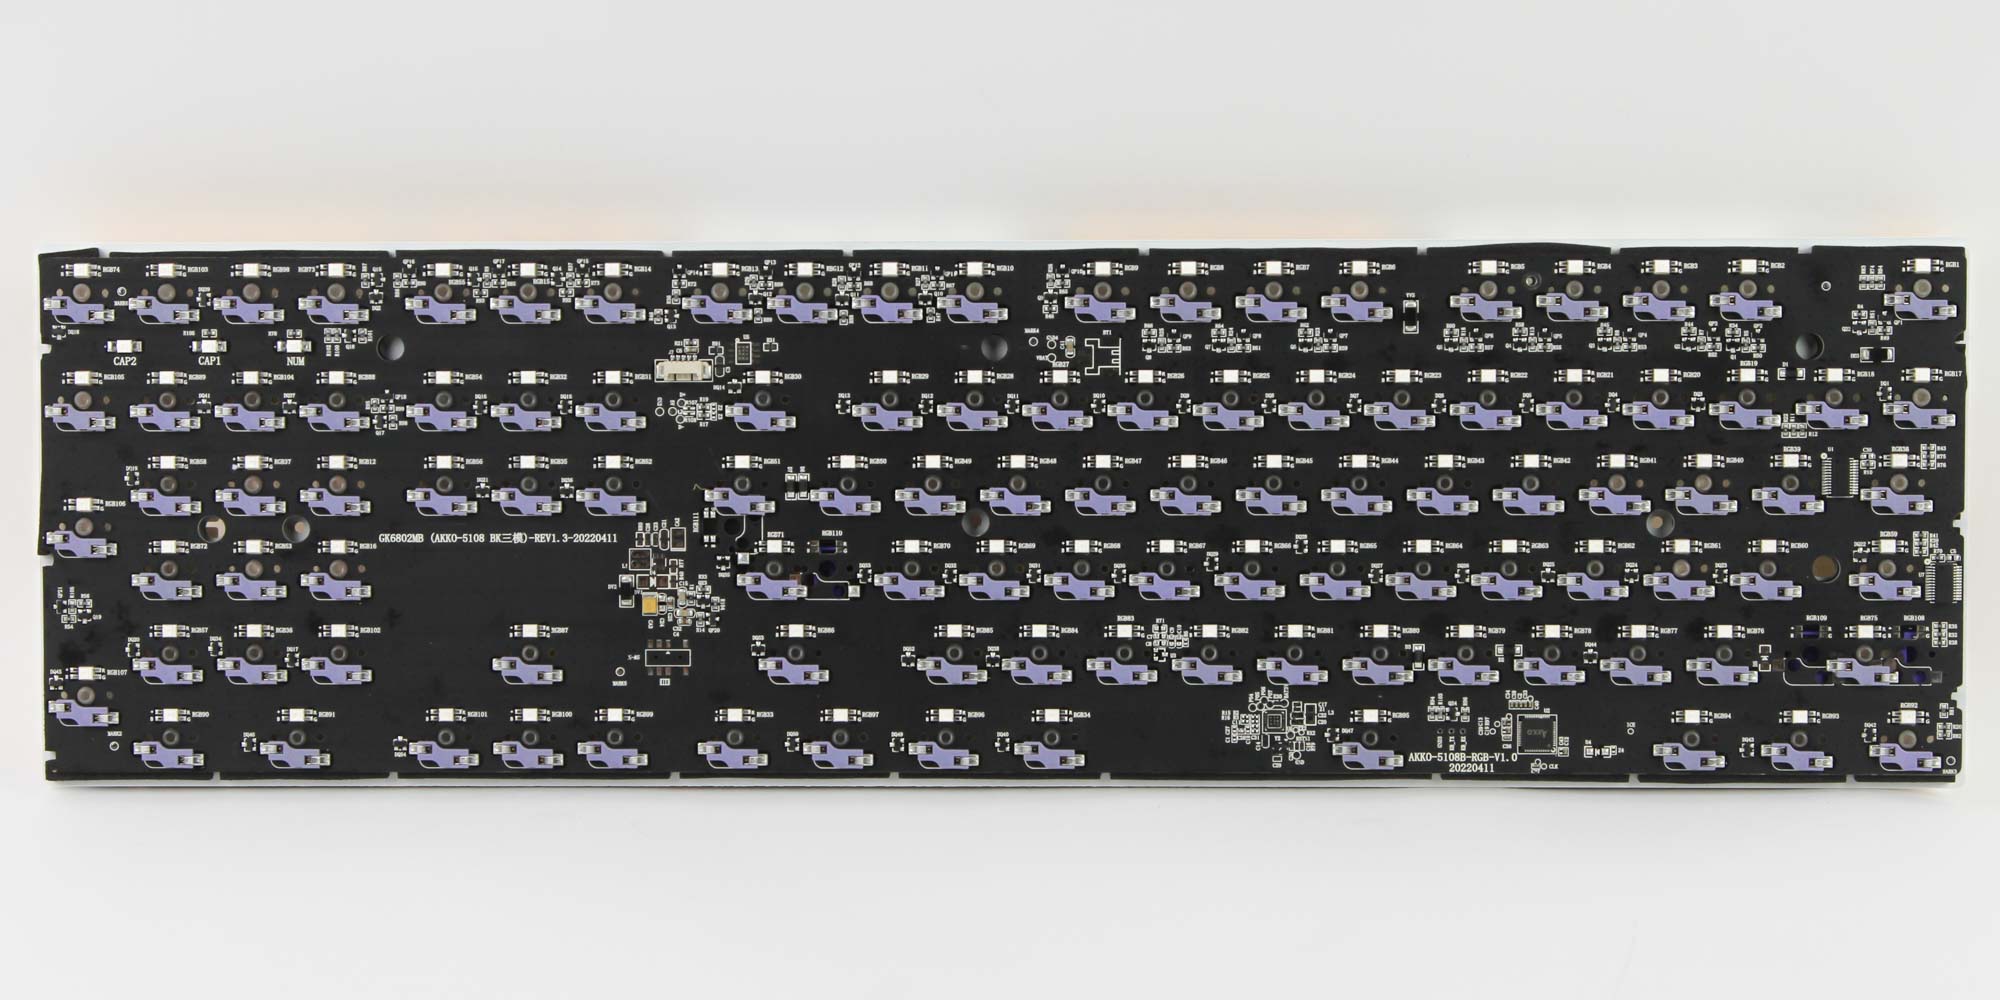 Akko x Gudetama 5108S Mechanical Keyboard Review - Disassembly 